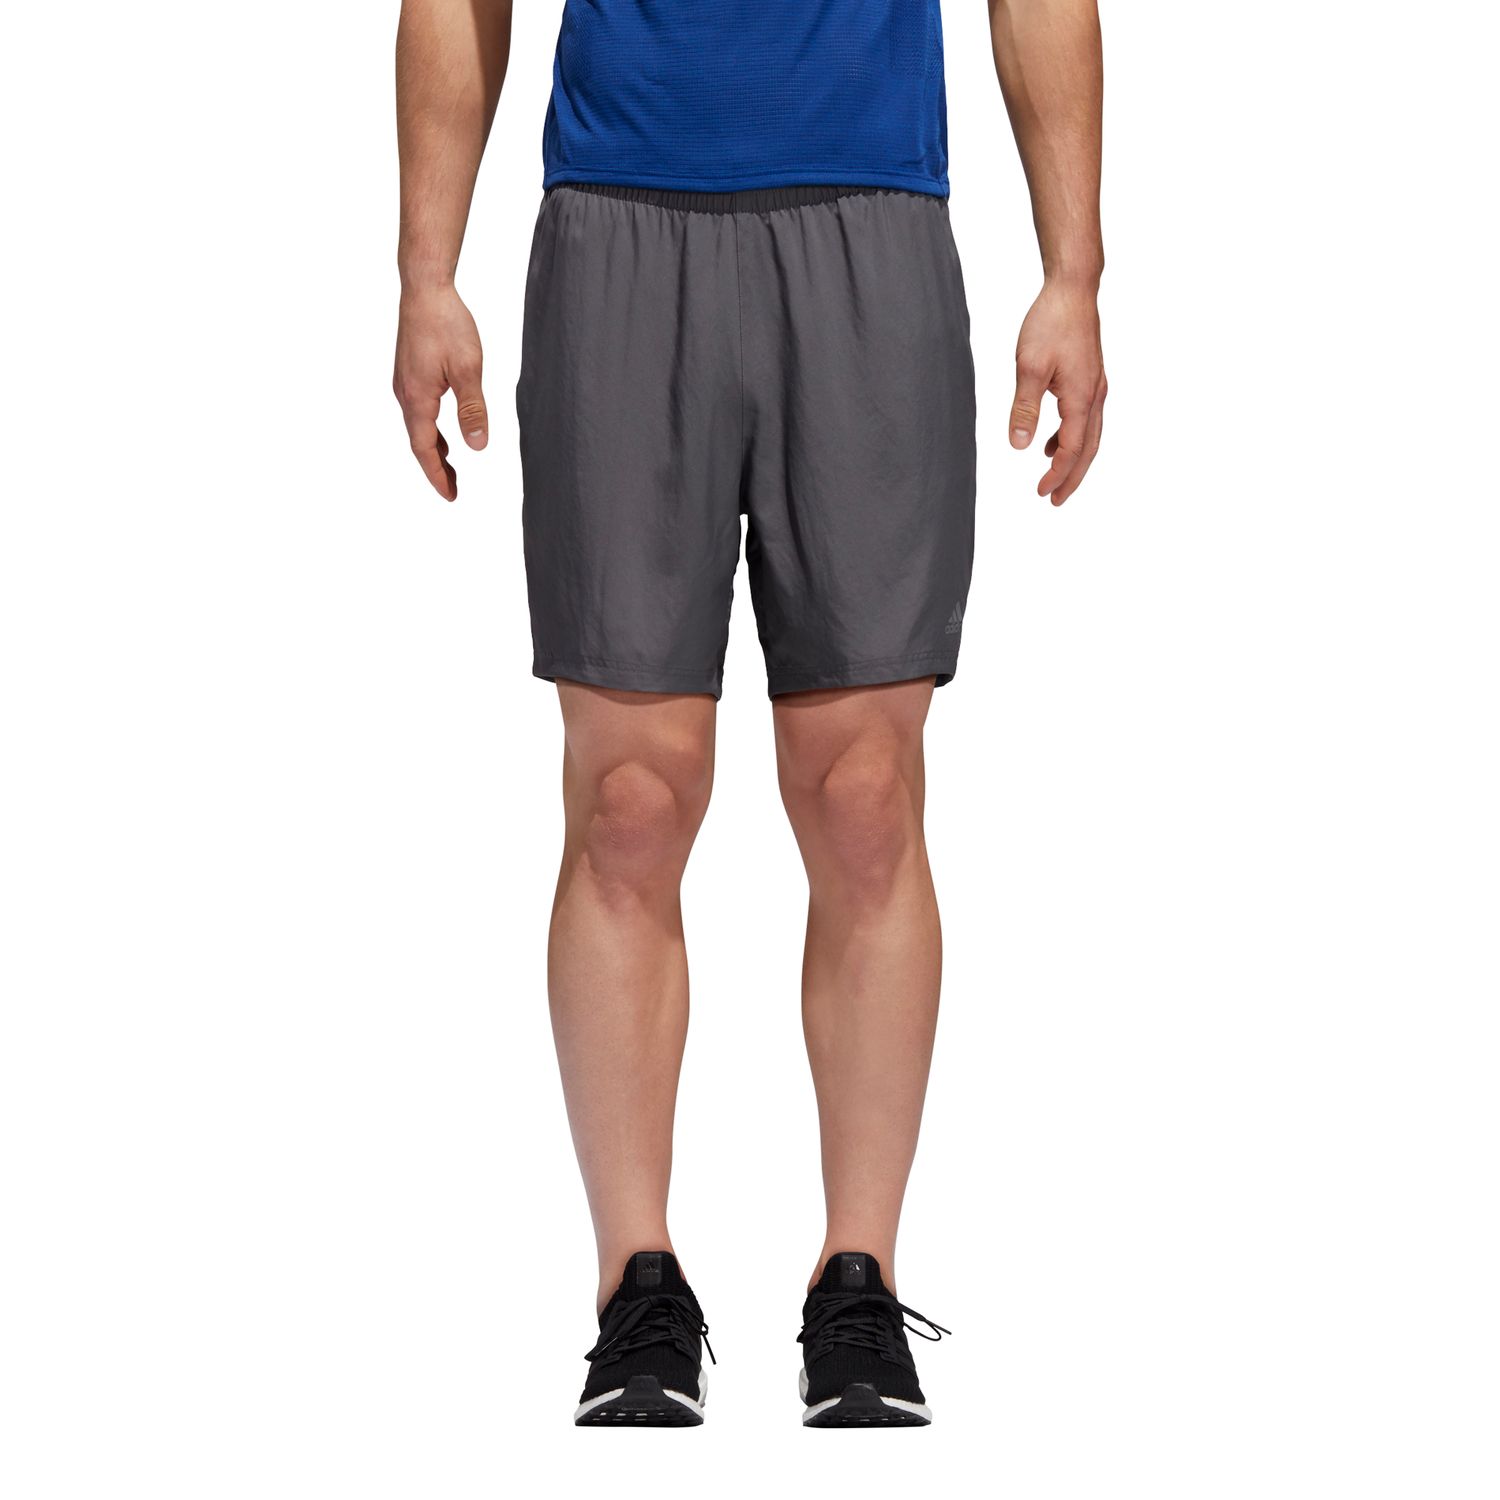 adidas running shorts with liner